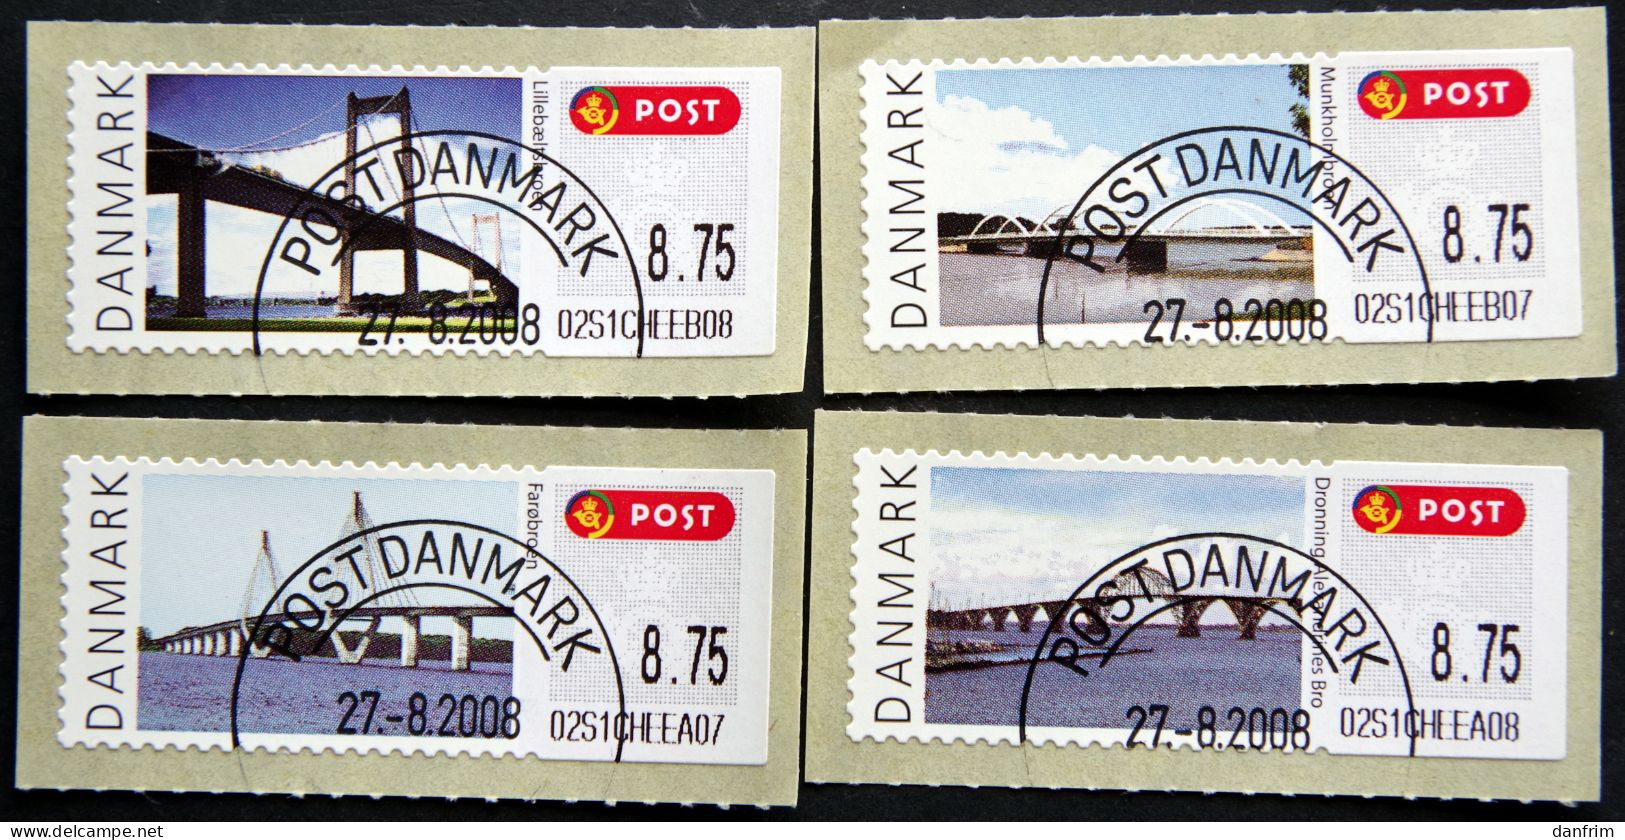 Denmark 2008 MiNr.42-45 (O) ( Lot L 66 ) ATM Franking Labels - Vignette [ATM]